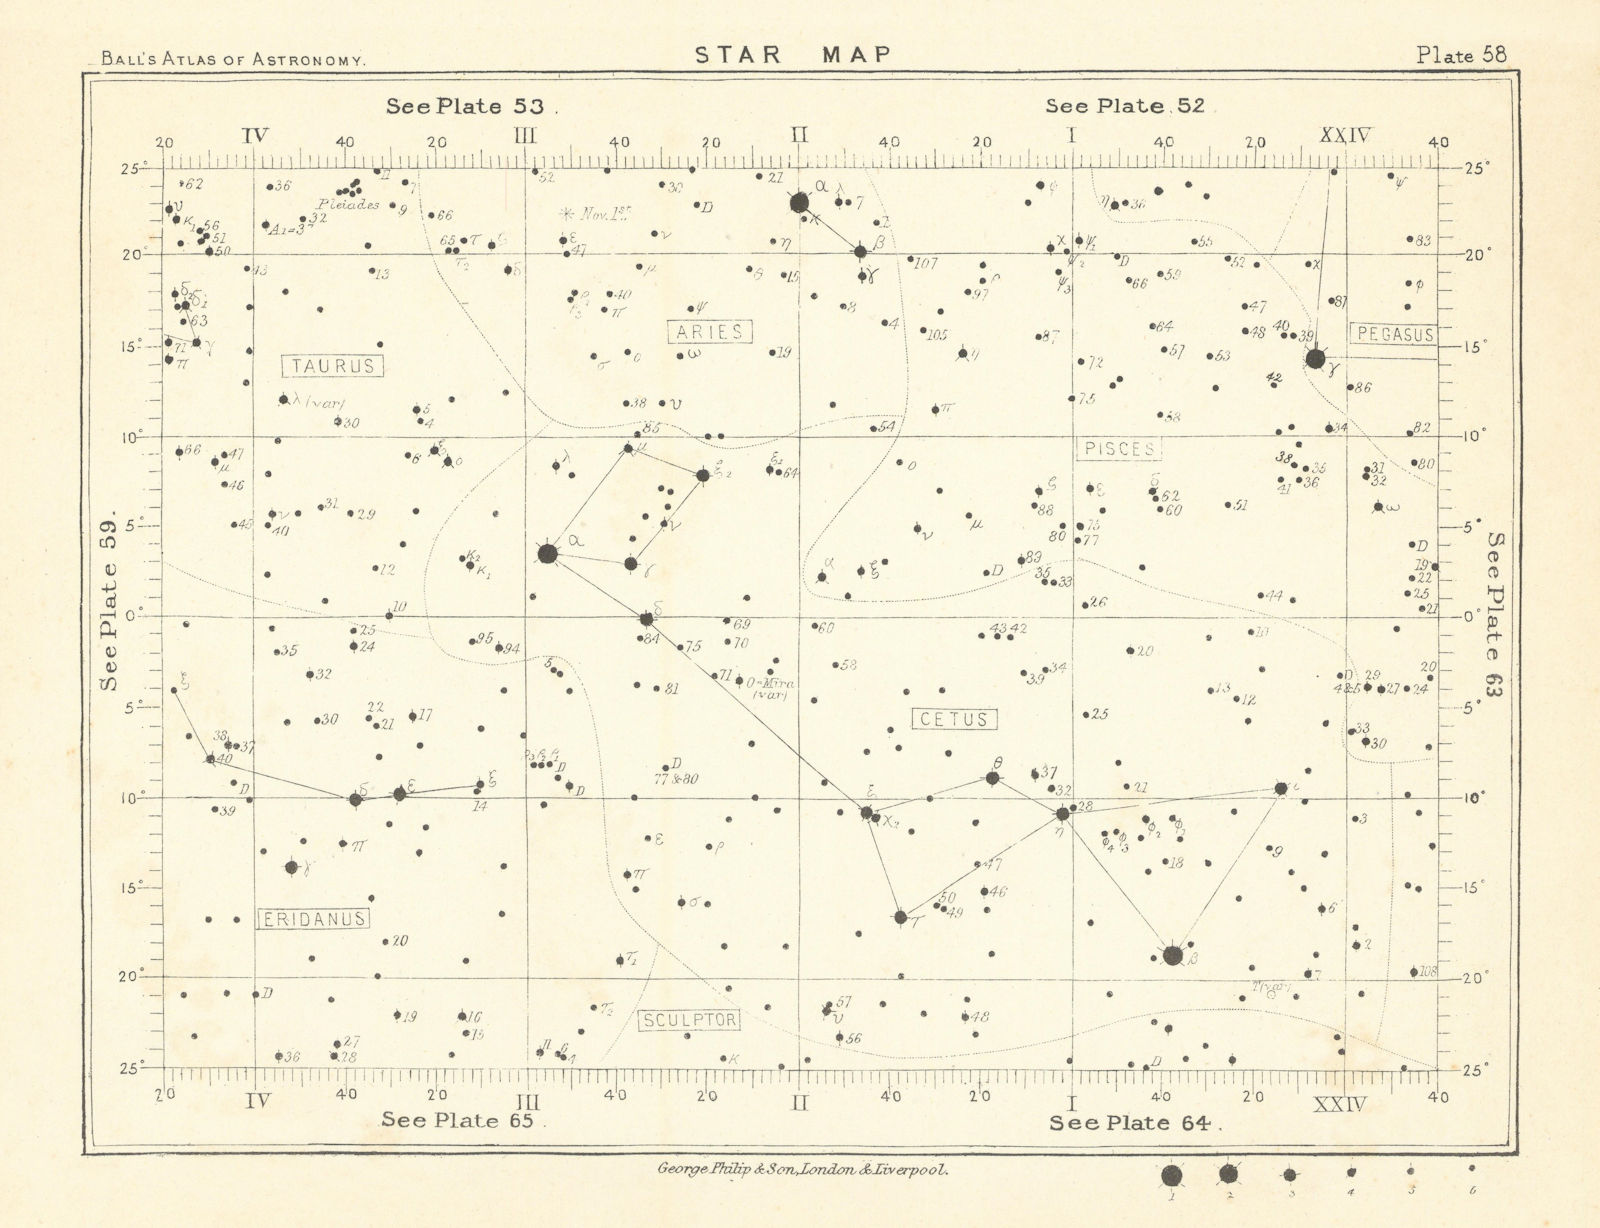 Star map night sky Aries Cetus Eridanus Pegasus Pisces Sculptor Taurus 1892